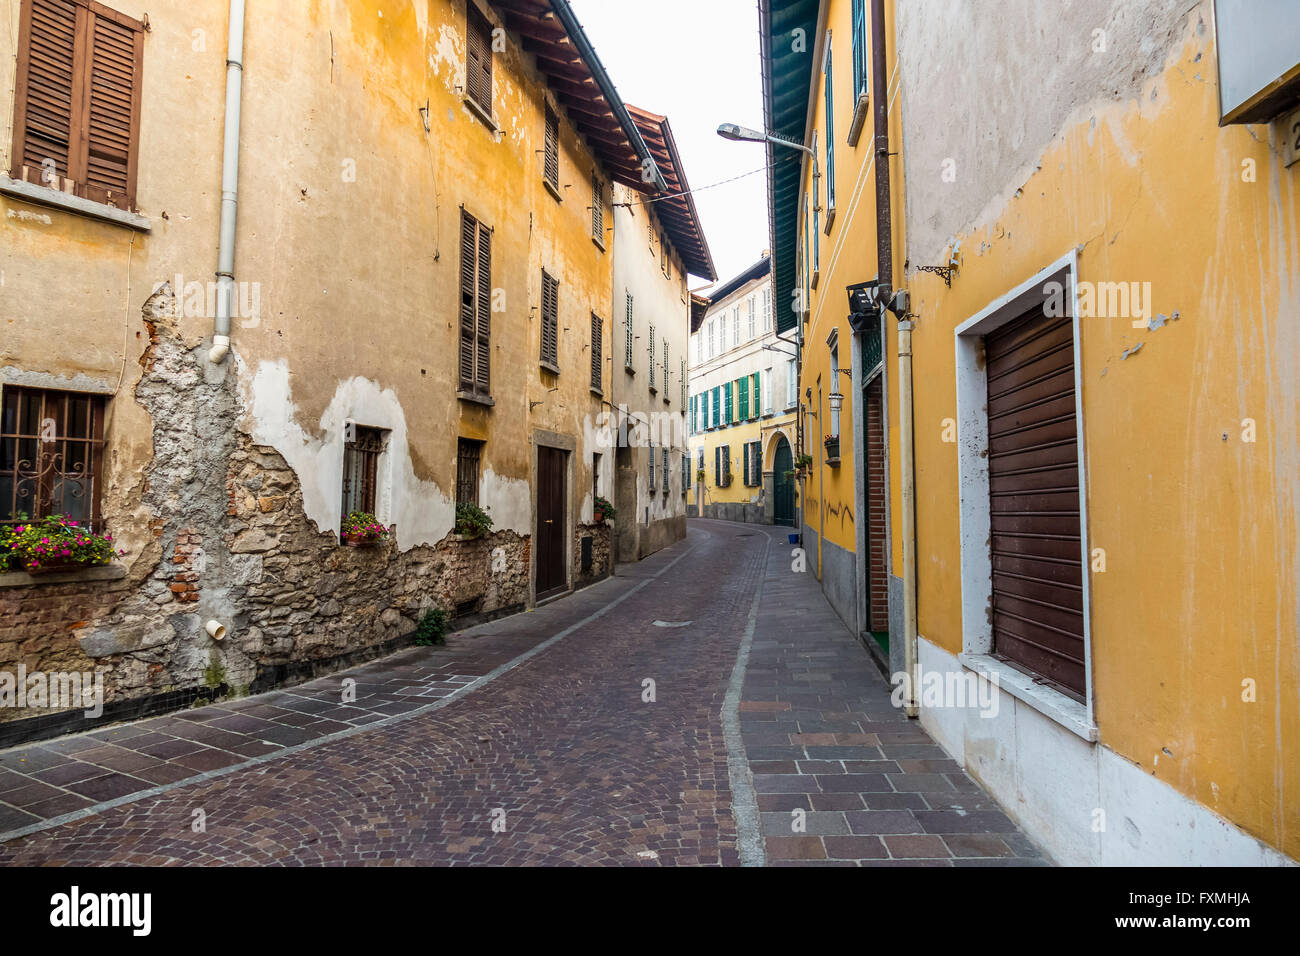 Street View di Somma Lombardo a Varese, Italia Foto stock - Alamy